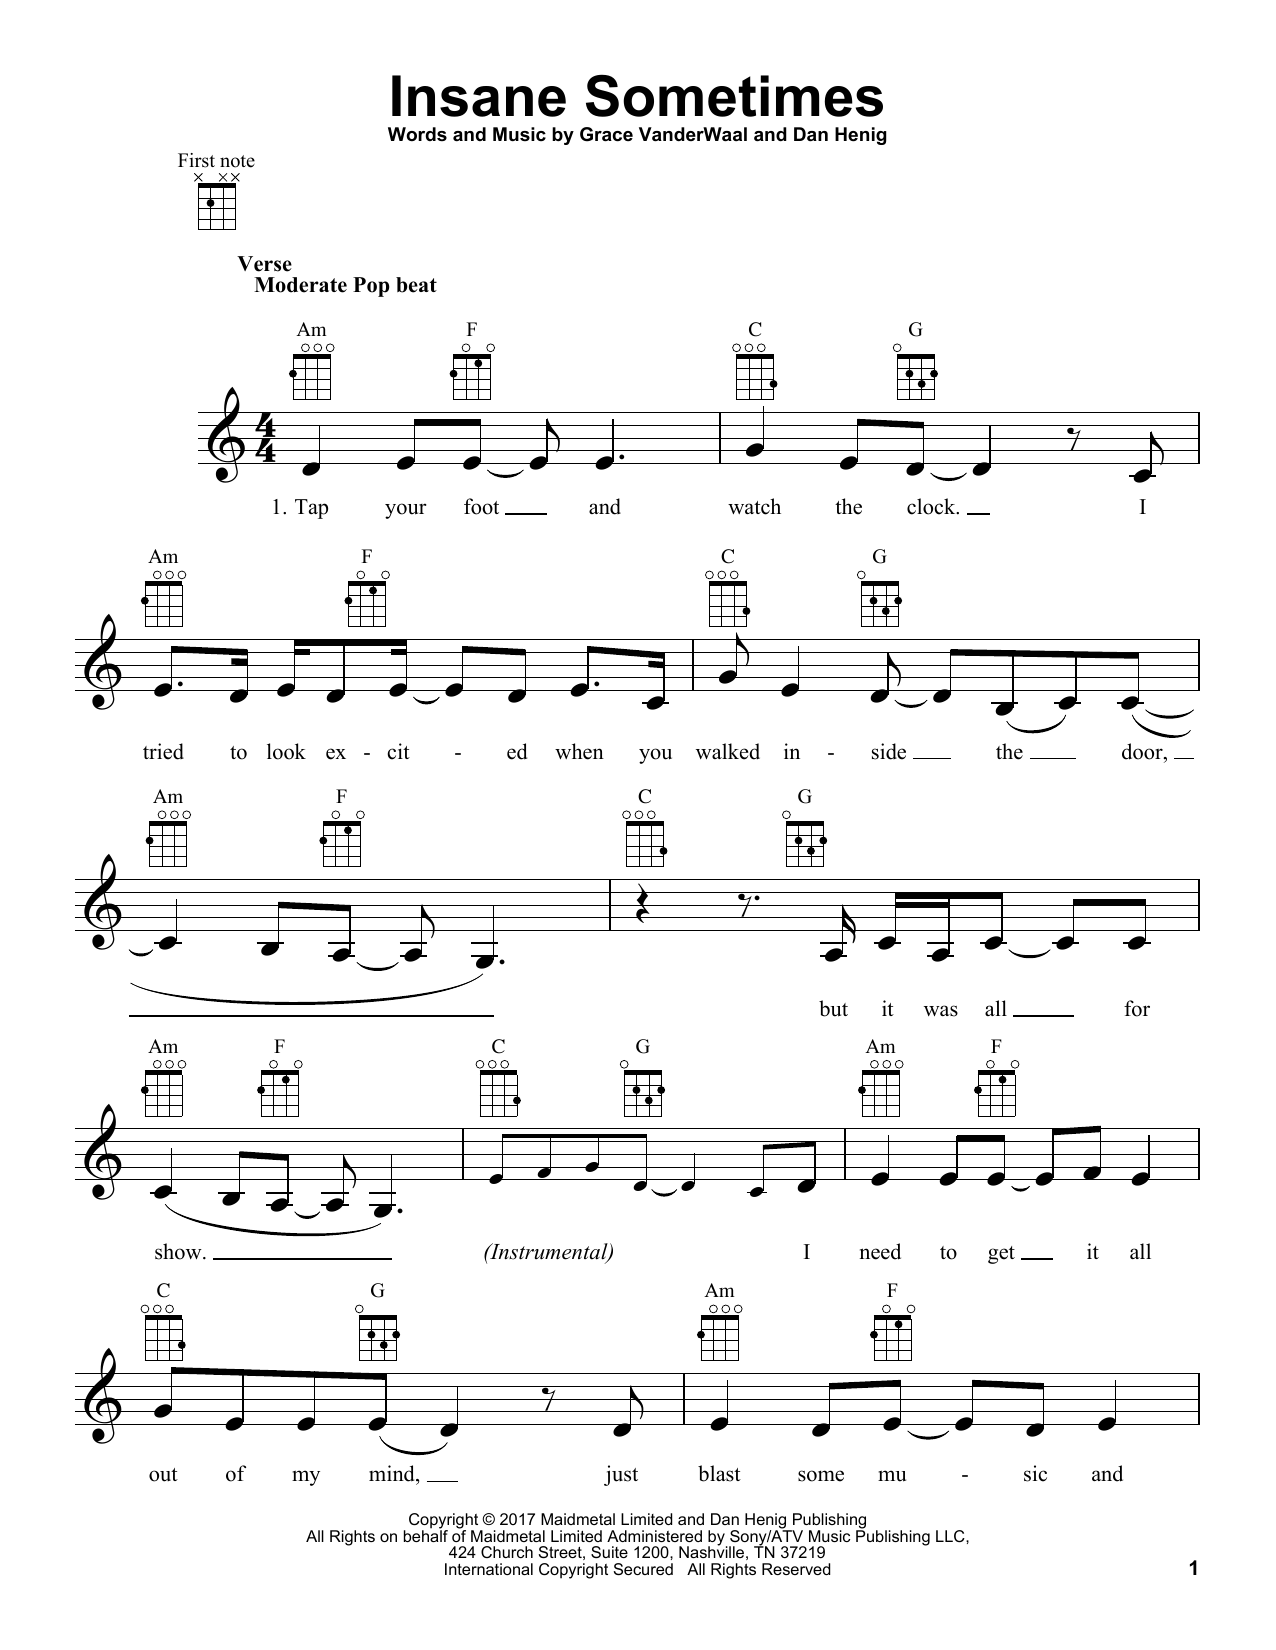 Grace VanderWaal Insane Sometimes Sheet Music Notes & Chords for Ukulele - Download or Print PDF